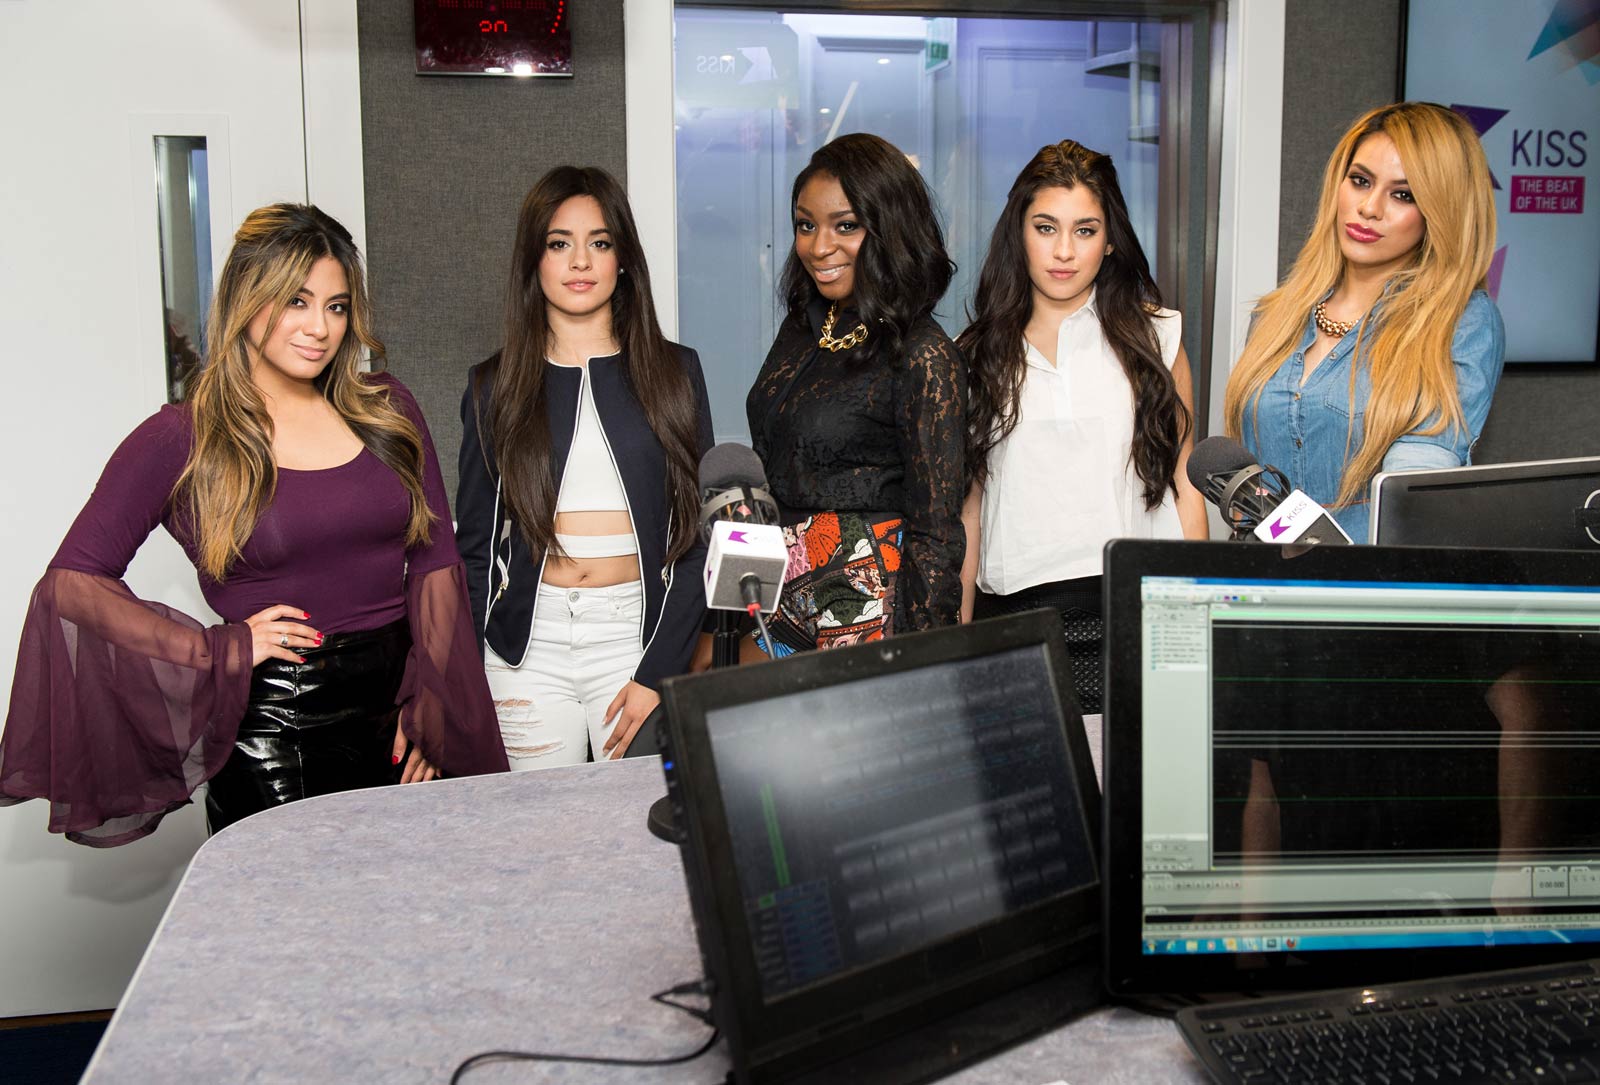 Fifth Harmony visit The KISS FM Breakfast show